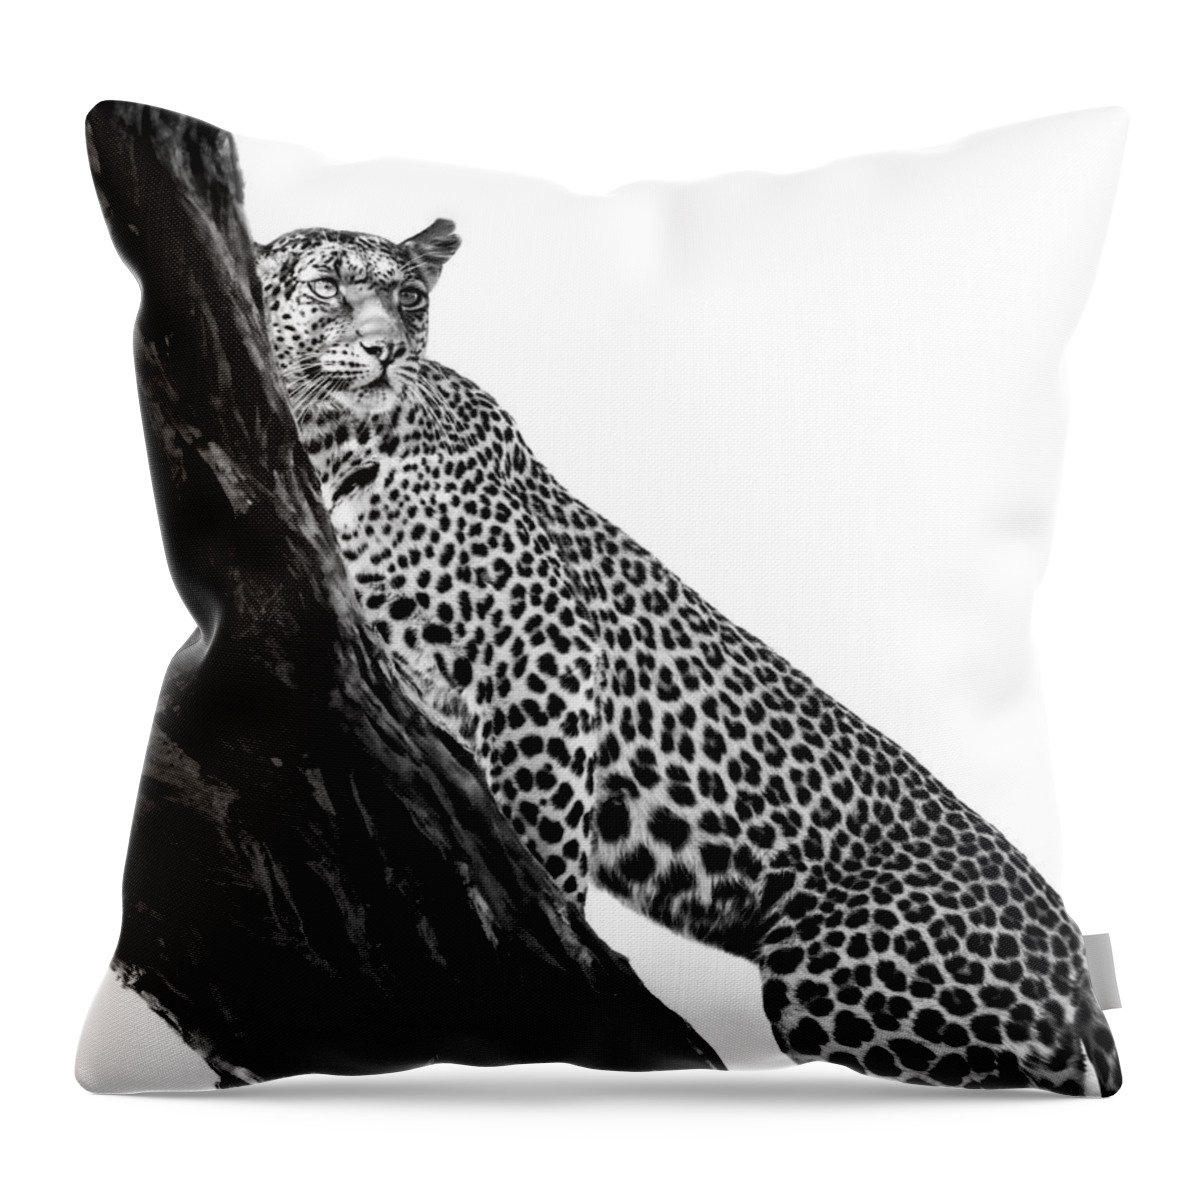 Leopard Throw Pillow featuring the photograph Leopard On Watch by Gigi Ebert